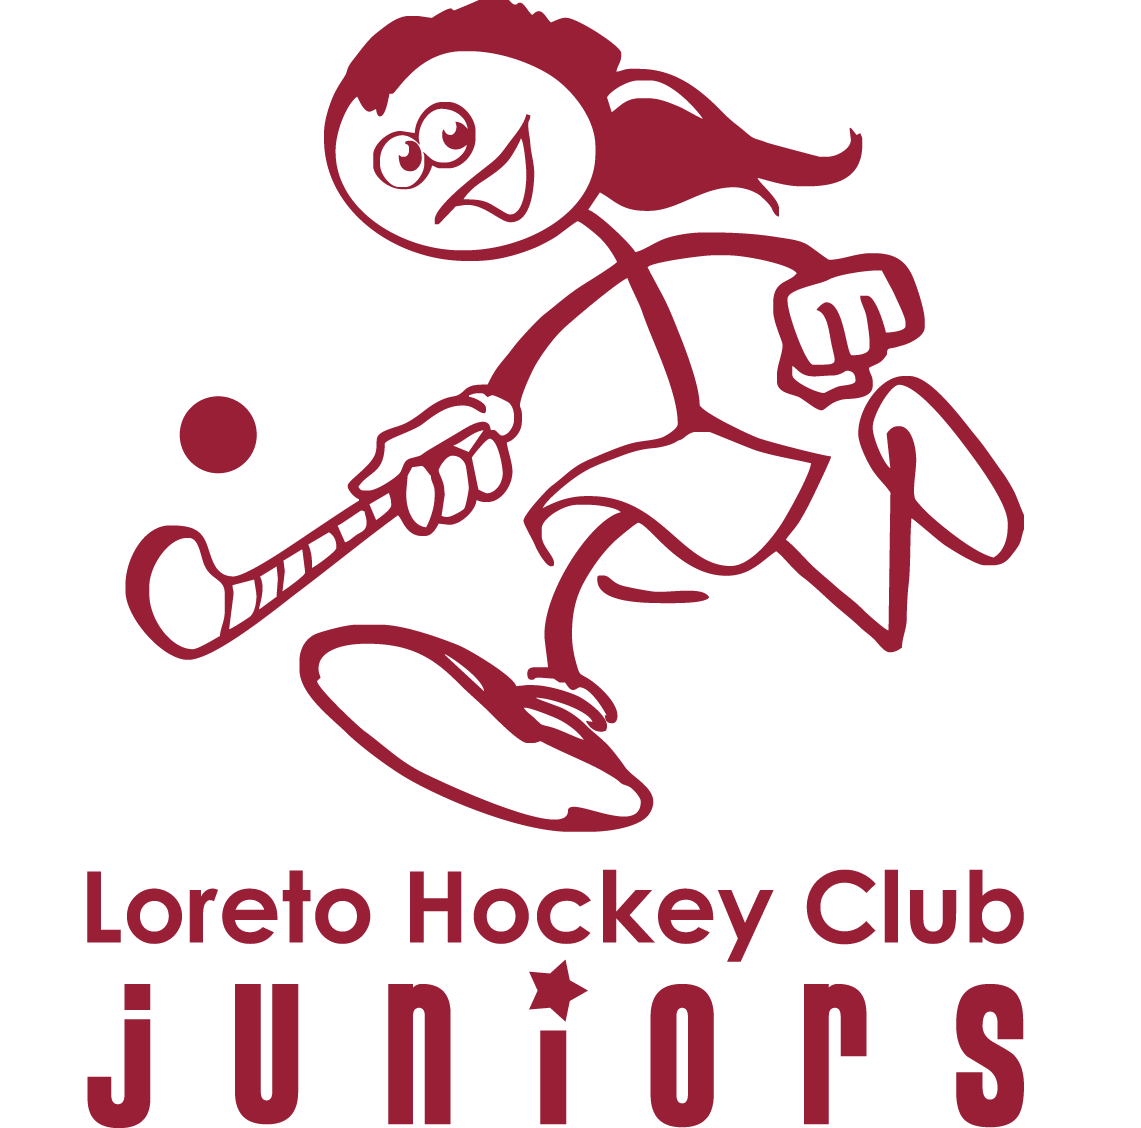 Loreto Hockey Club Juniors